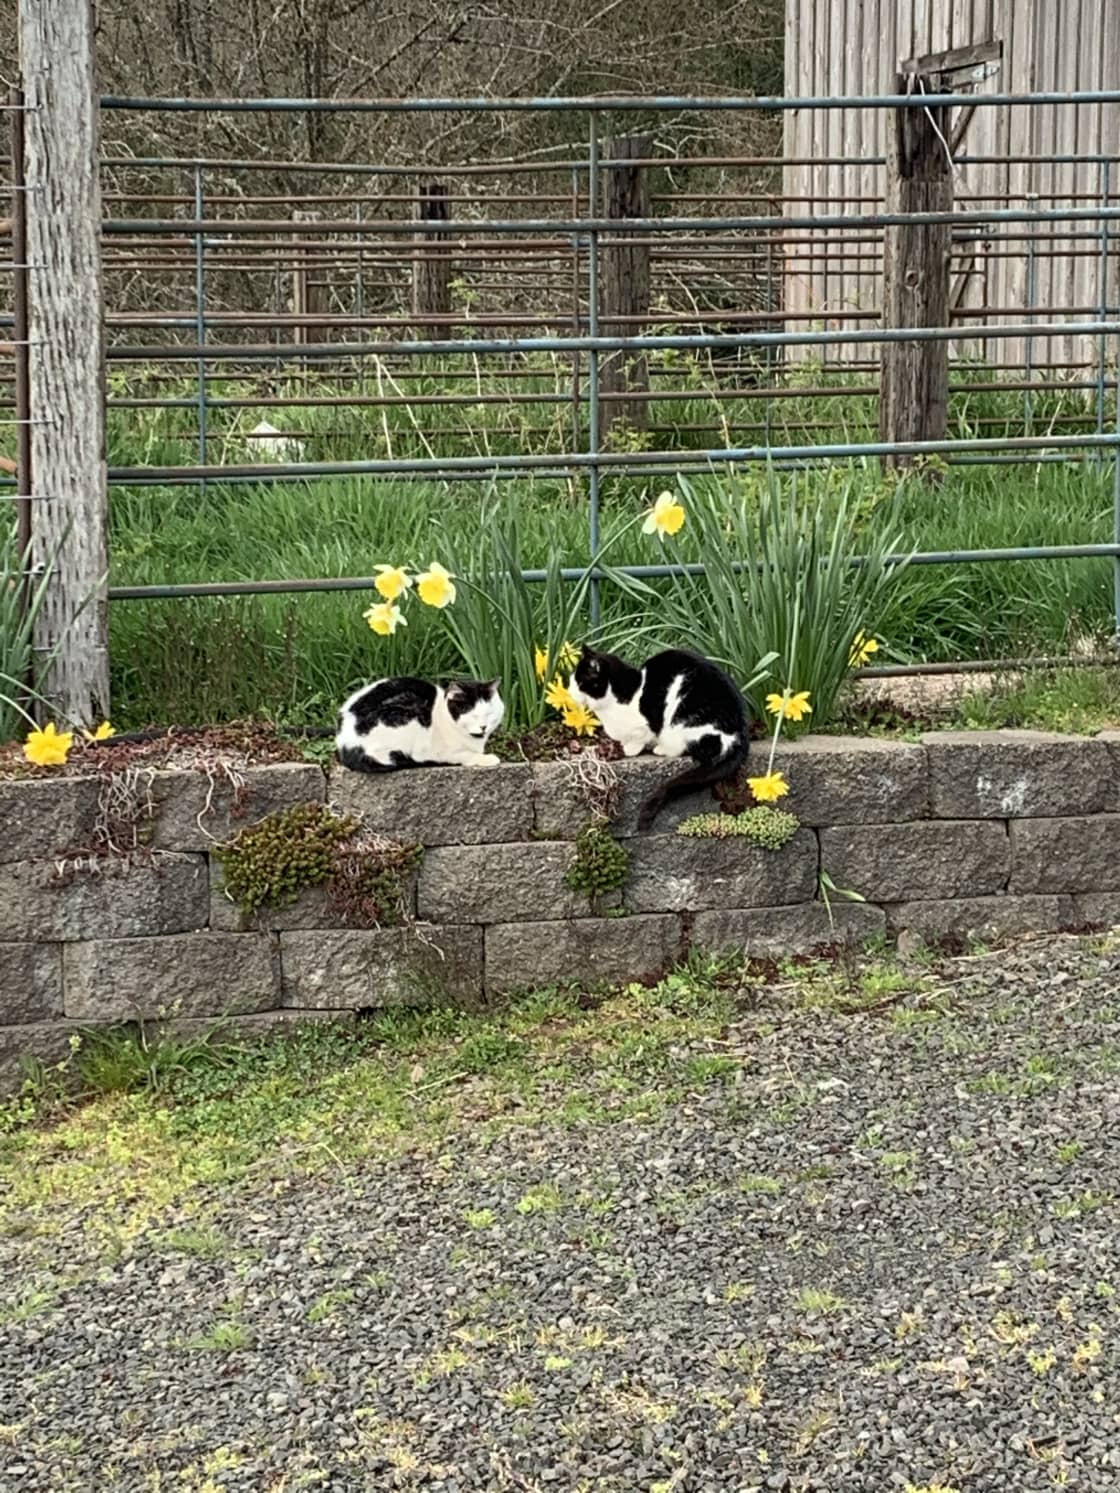 Barn cats enjoying the rock wall